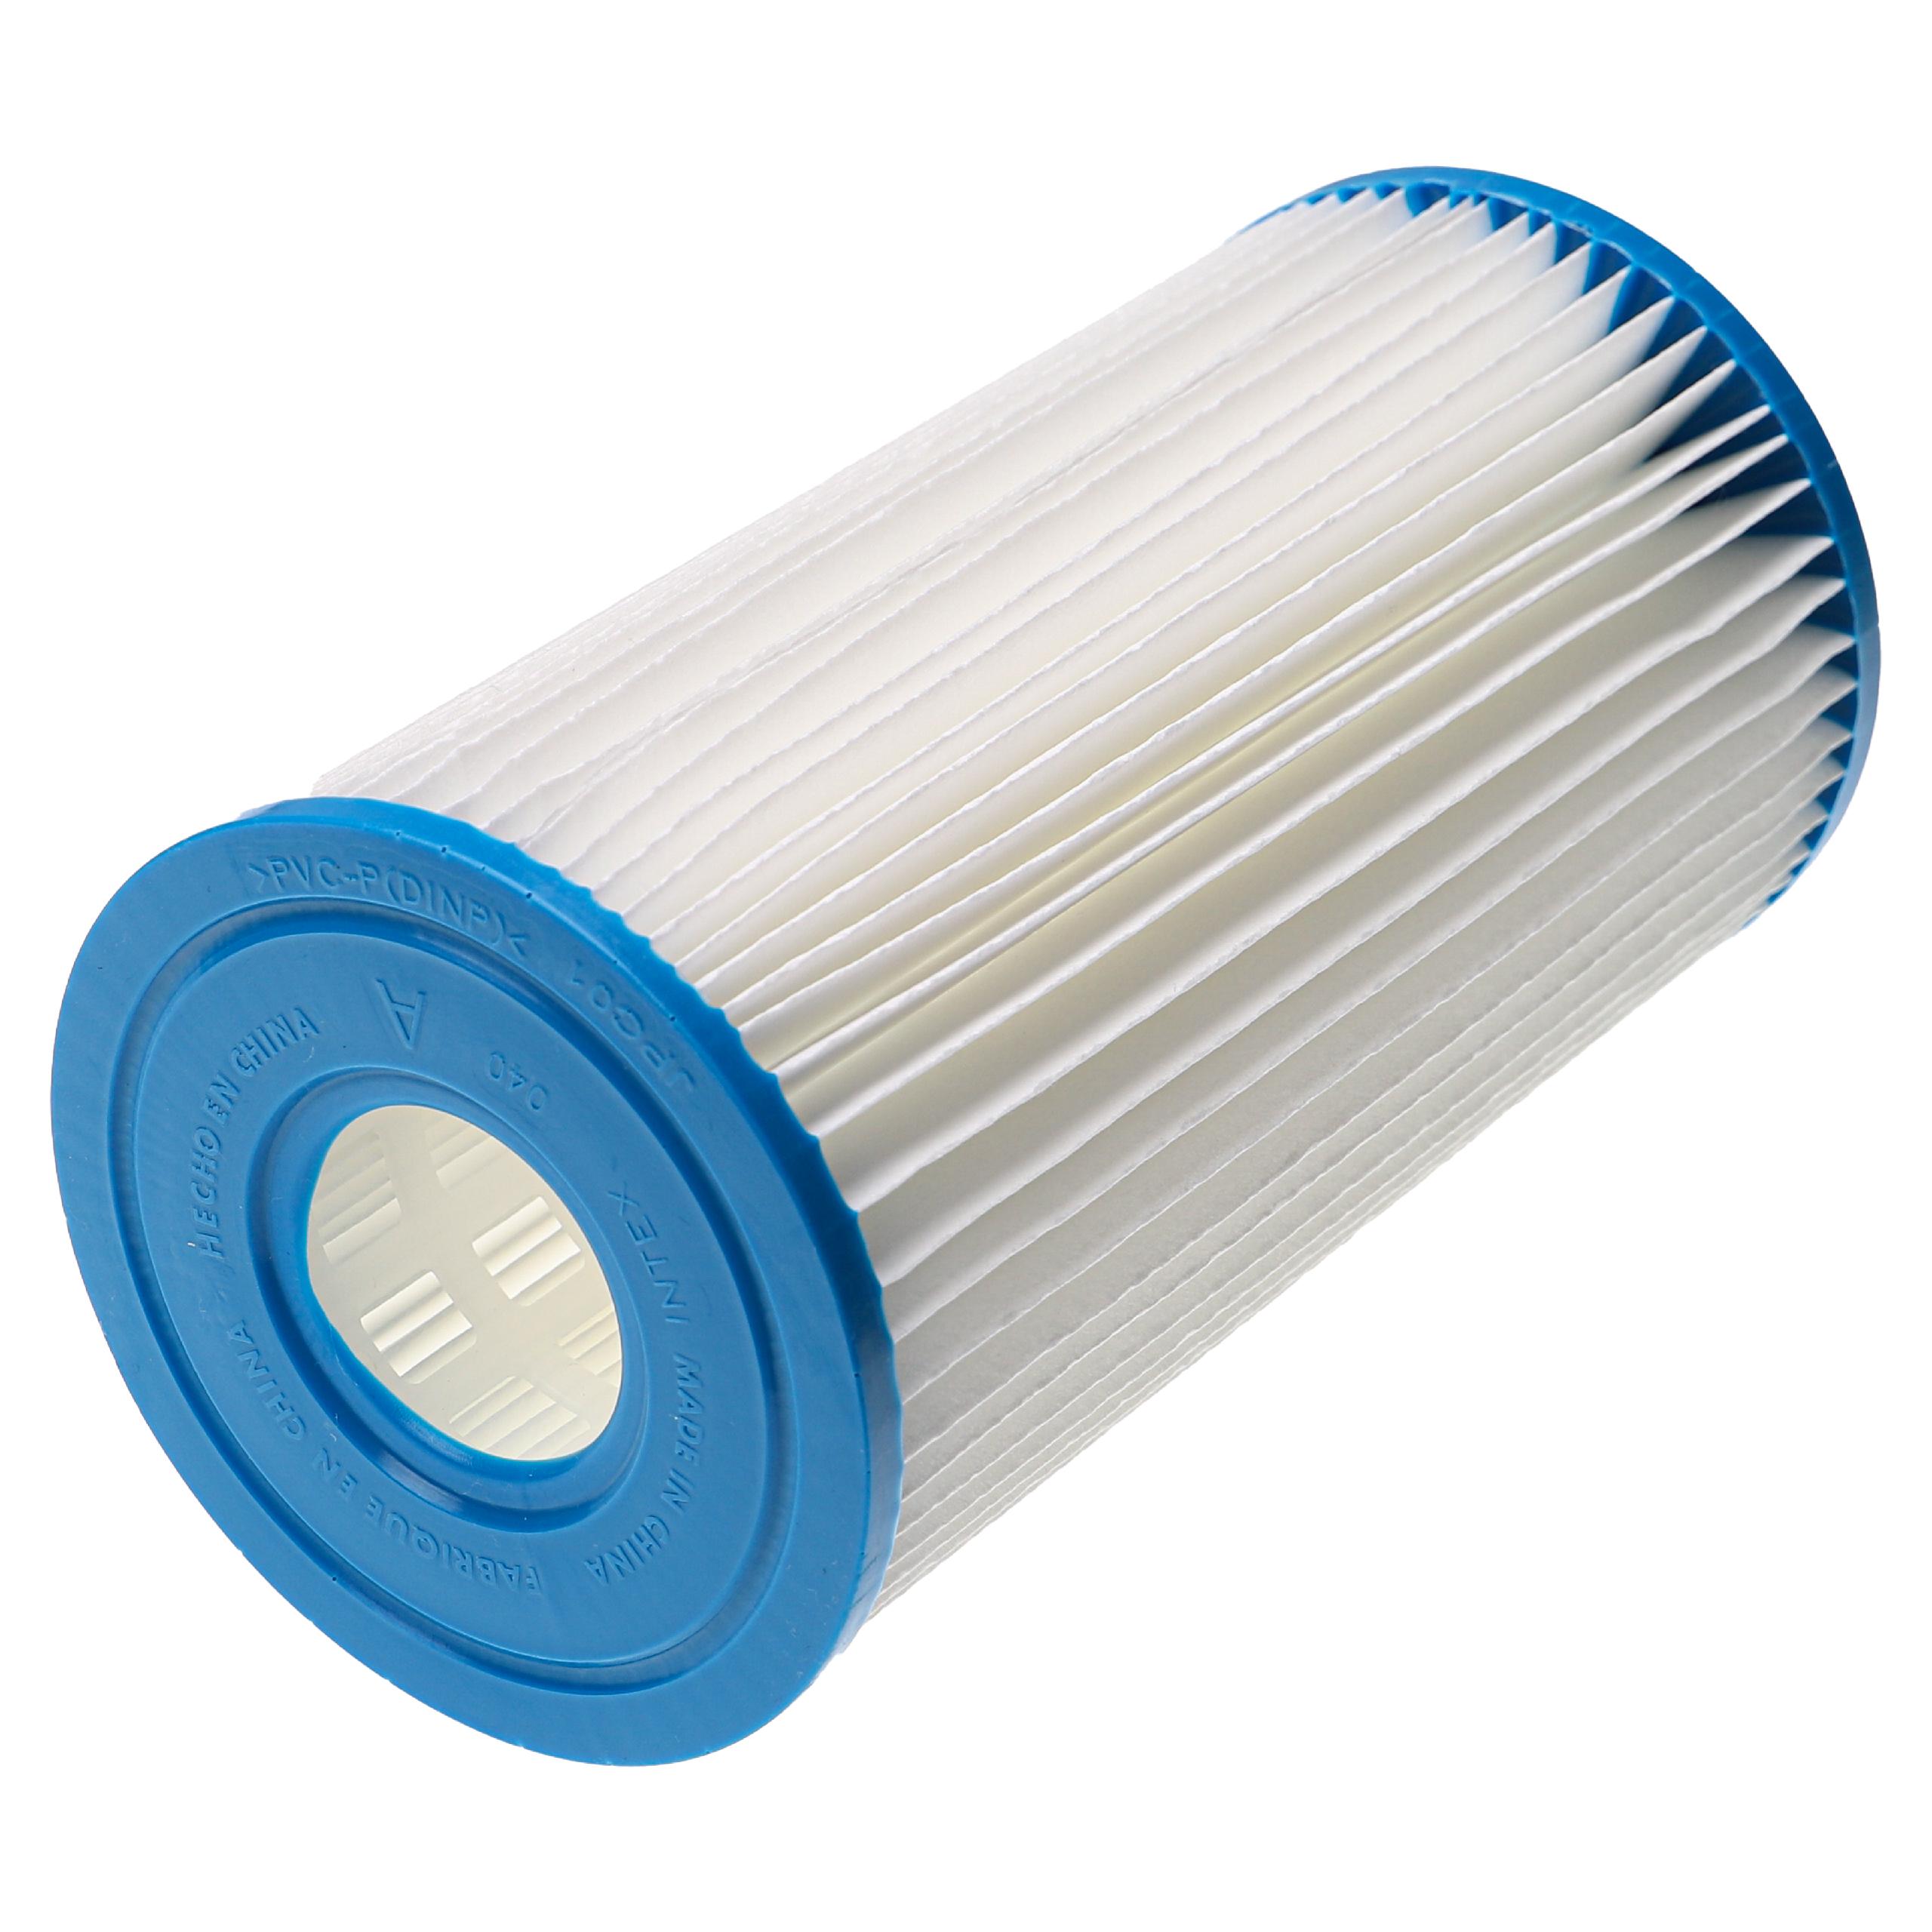 3x Cartucho de filtro reemplaza Intex filtro tipo A para bomba de filtración - blanco / azul